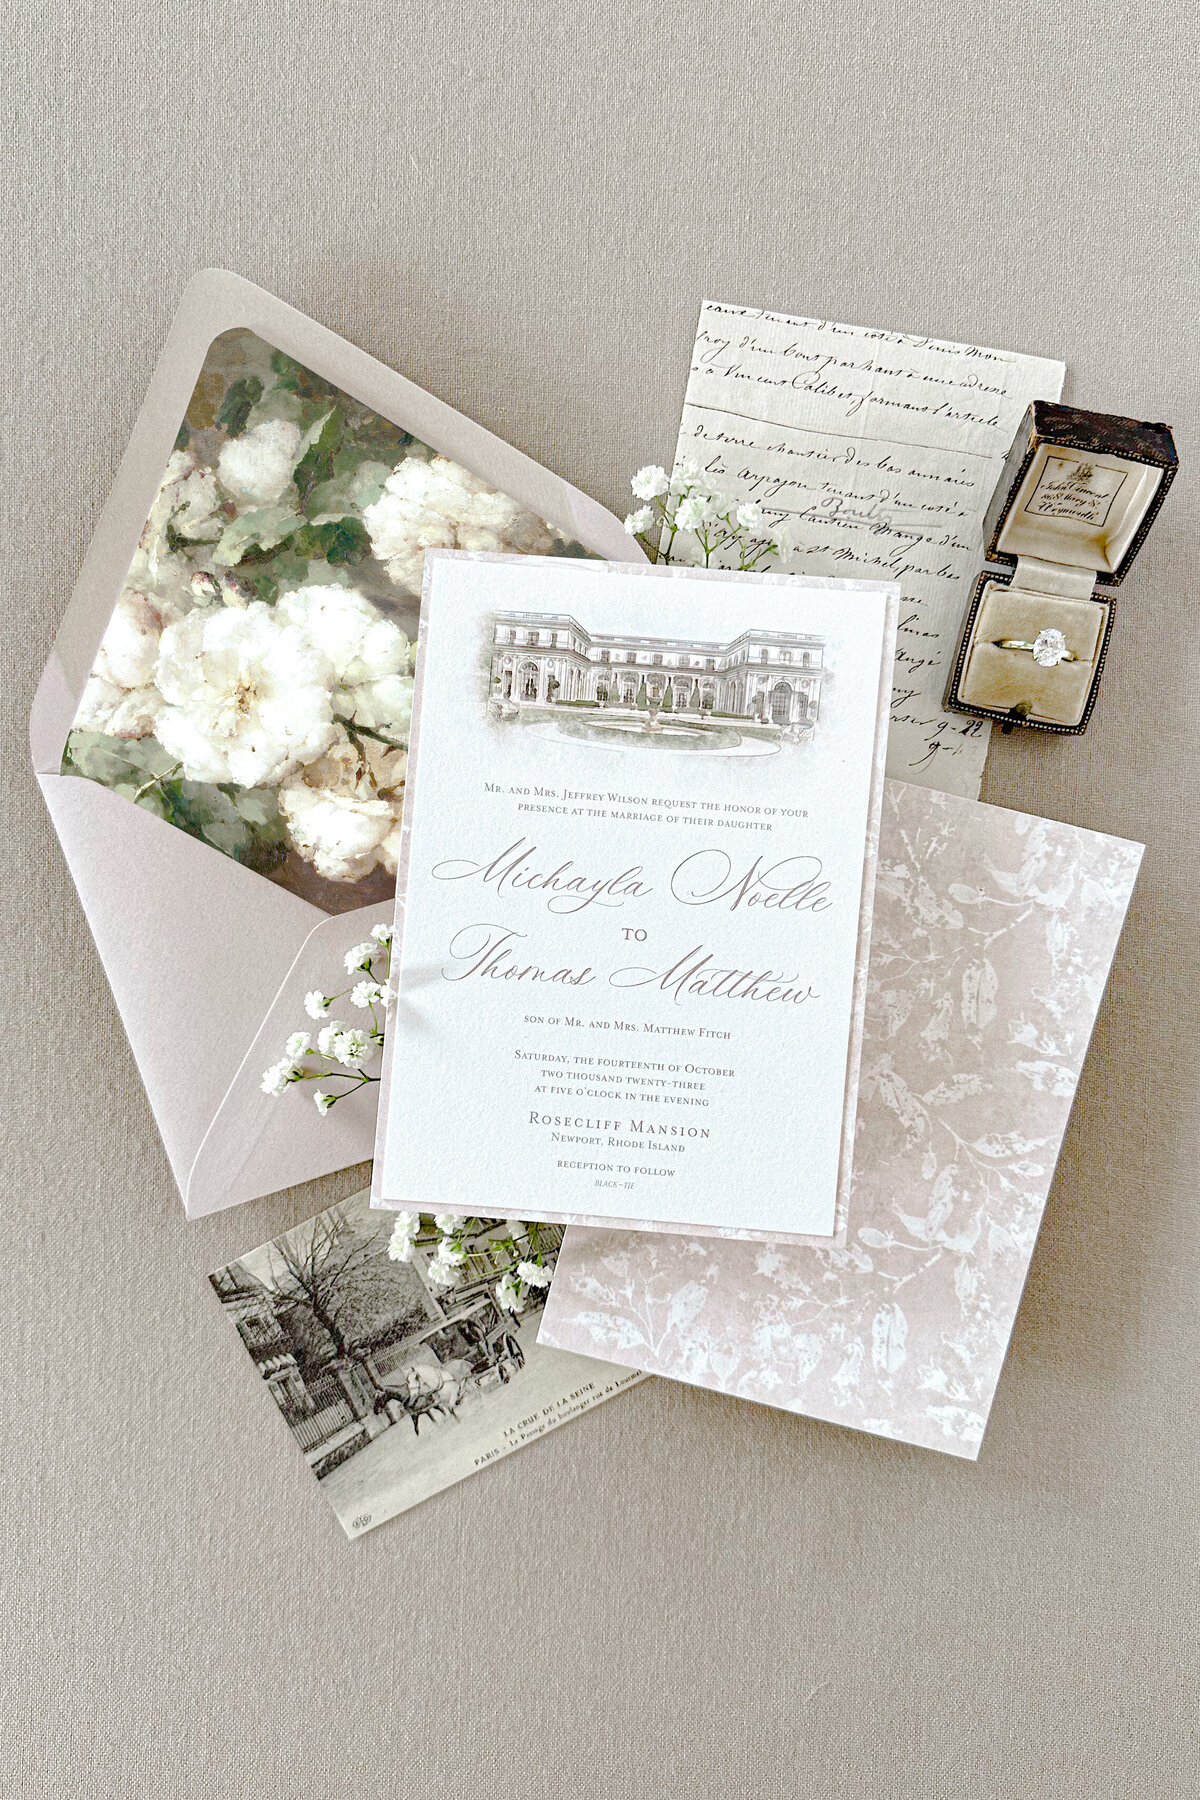 rosecliff-mansion-rhode-island-gilded-age-wedding-invitation-suite-06